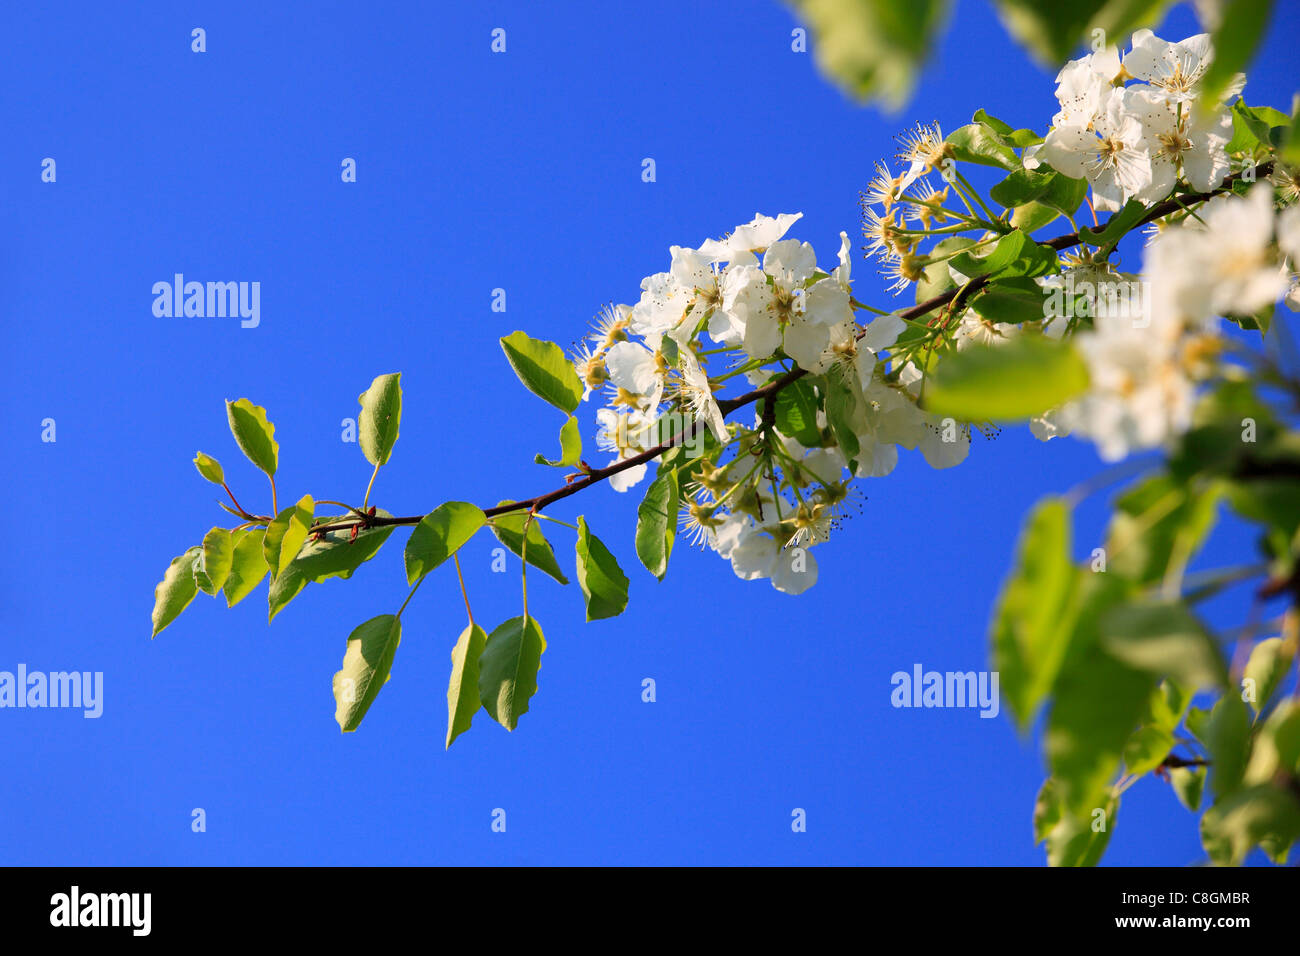 Agrarian, branch, knot, tree, pear tree, pear, pears, leaves, blossom, flourish, flower, splendour, detail, flora, spring, sky, Stock Photo